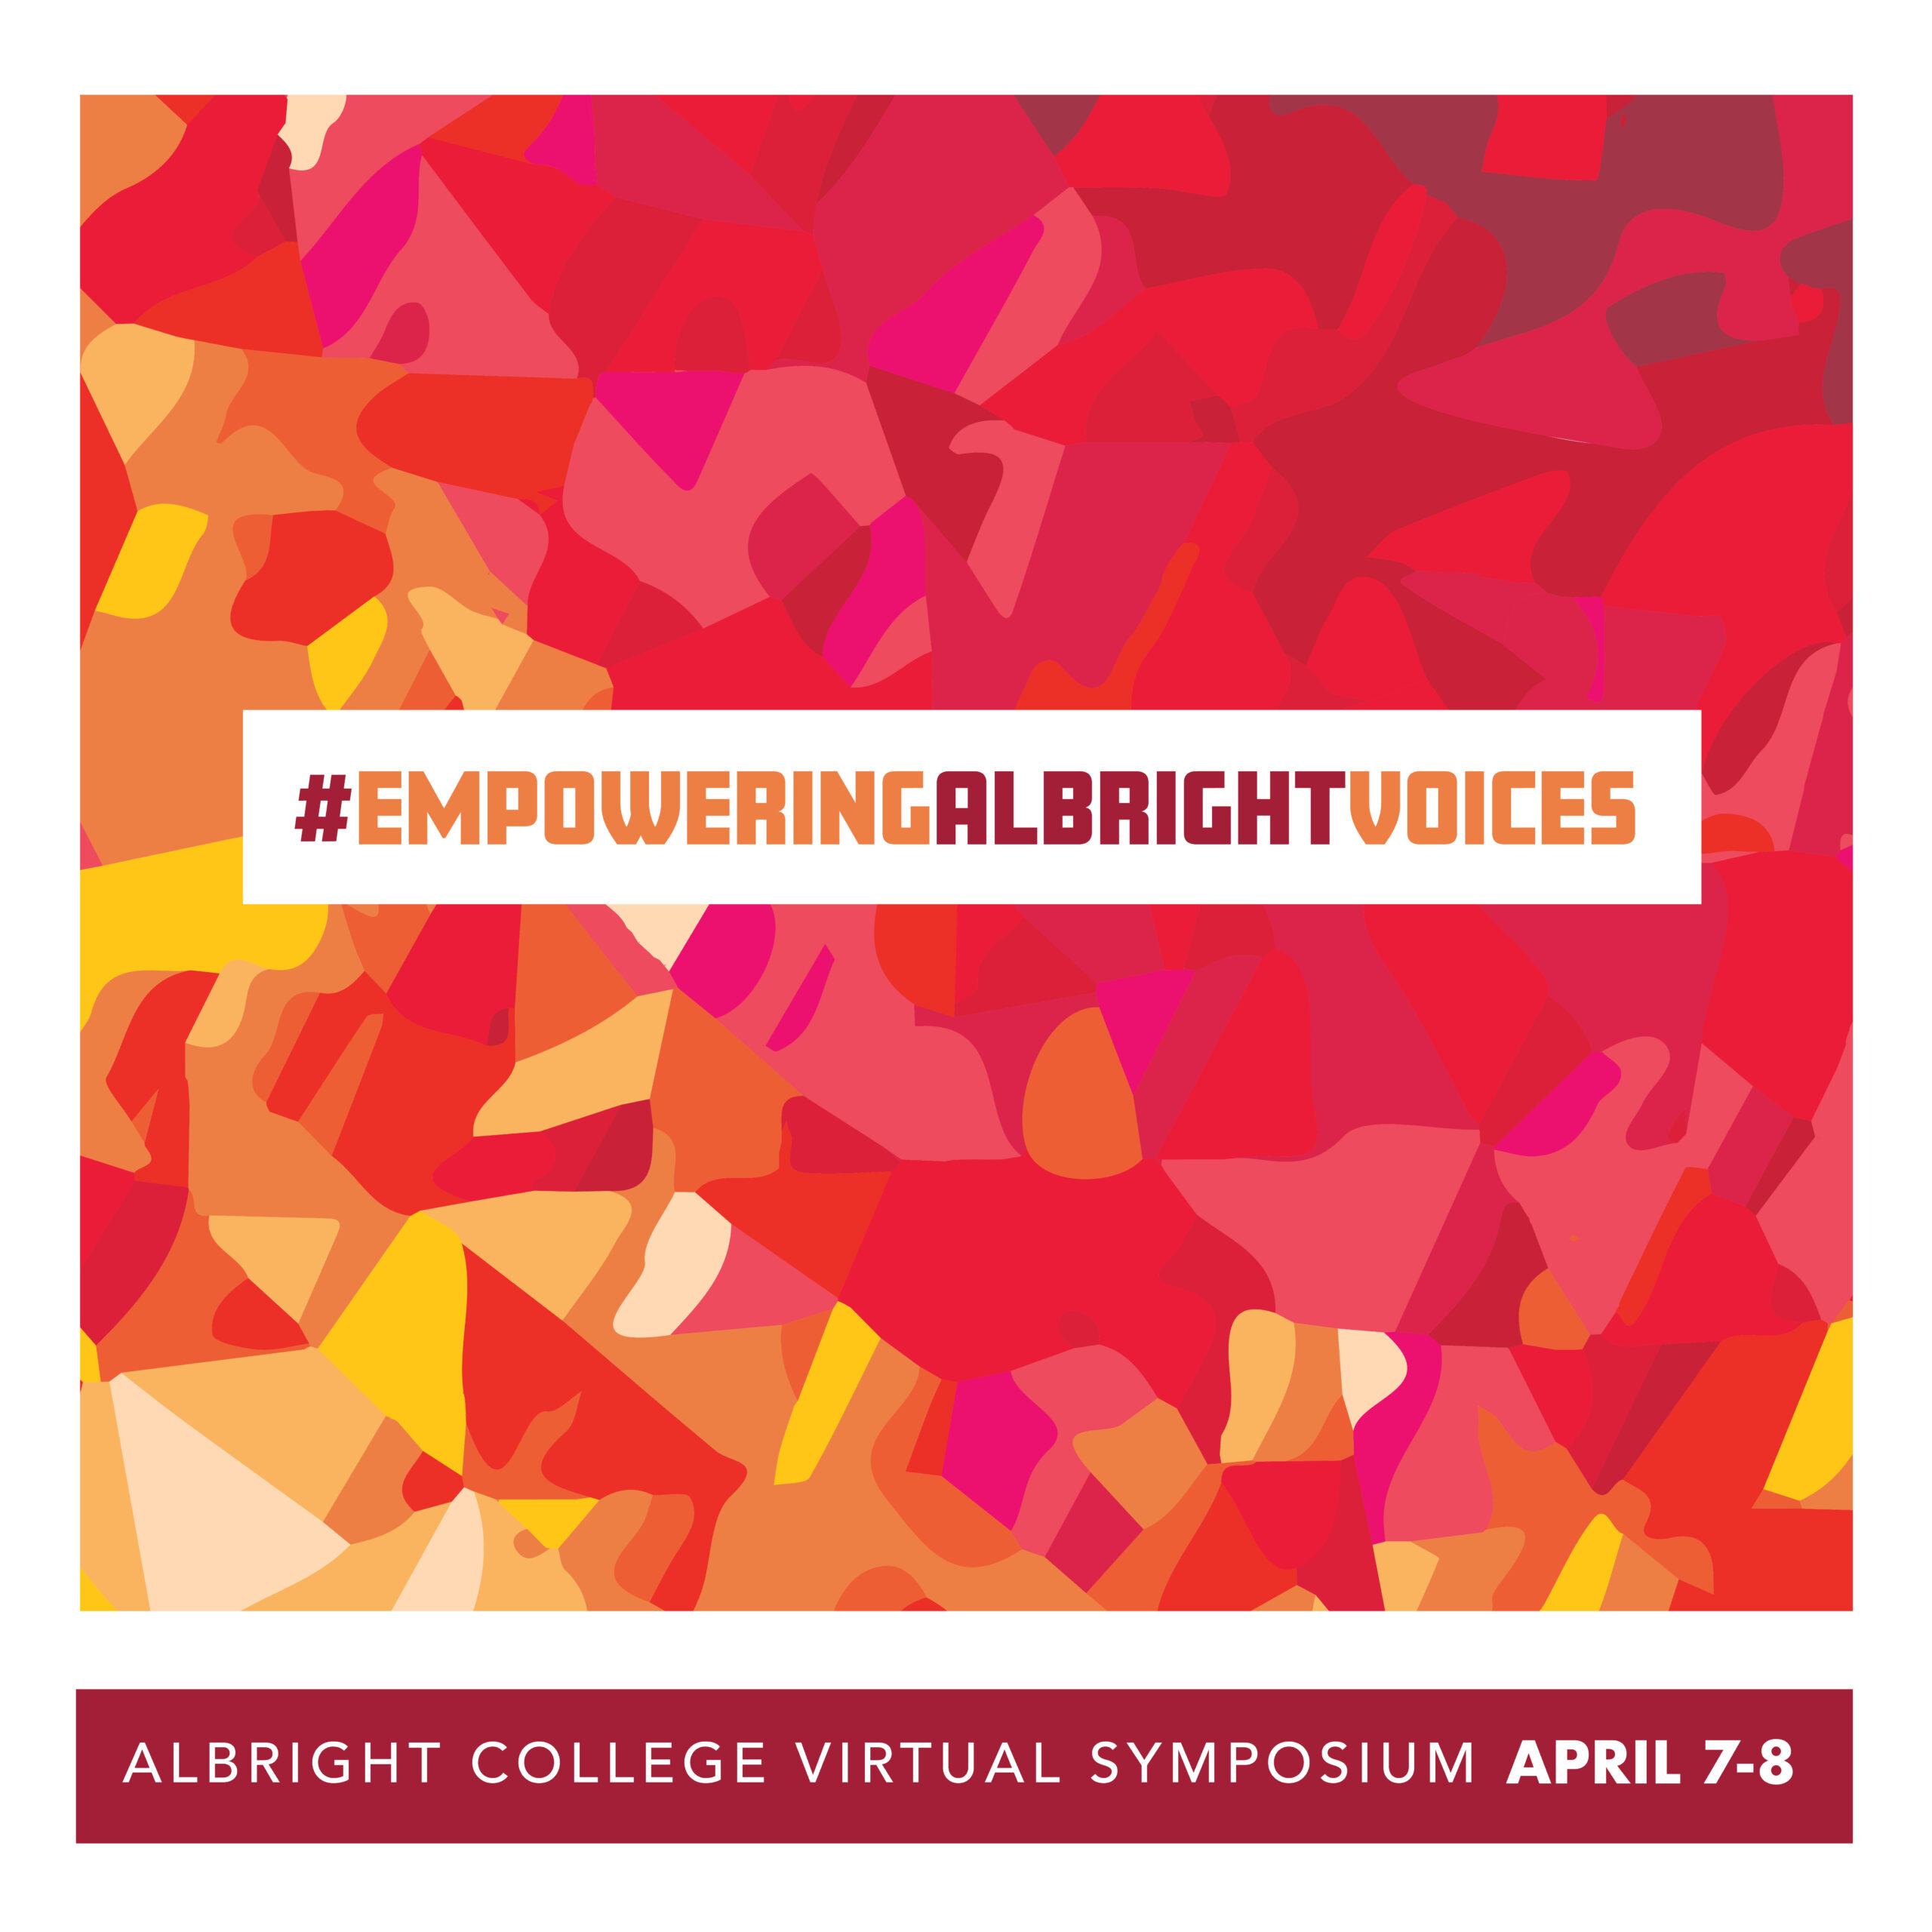 "Empowering Albright Voices" hashtag